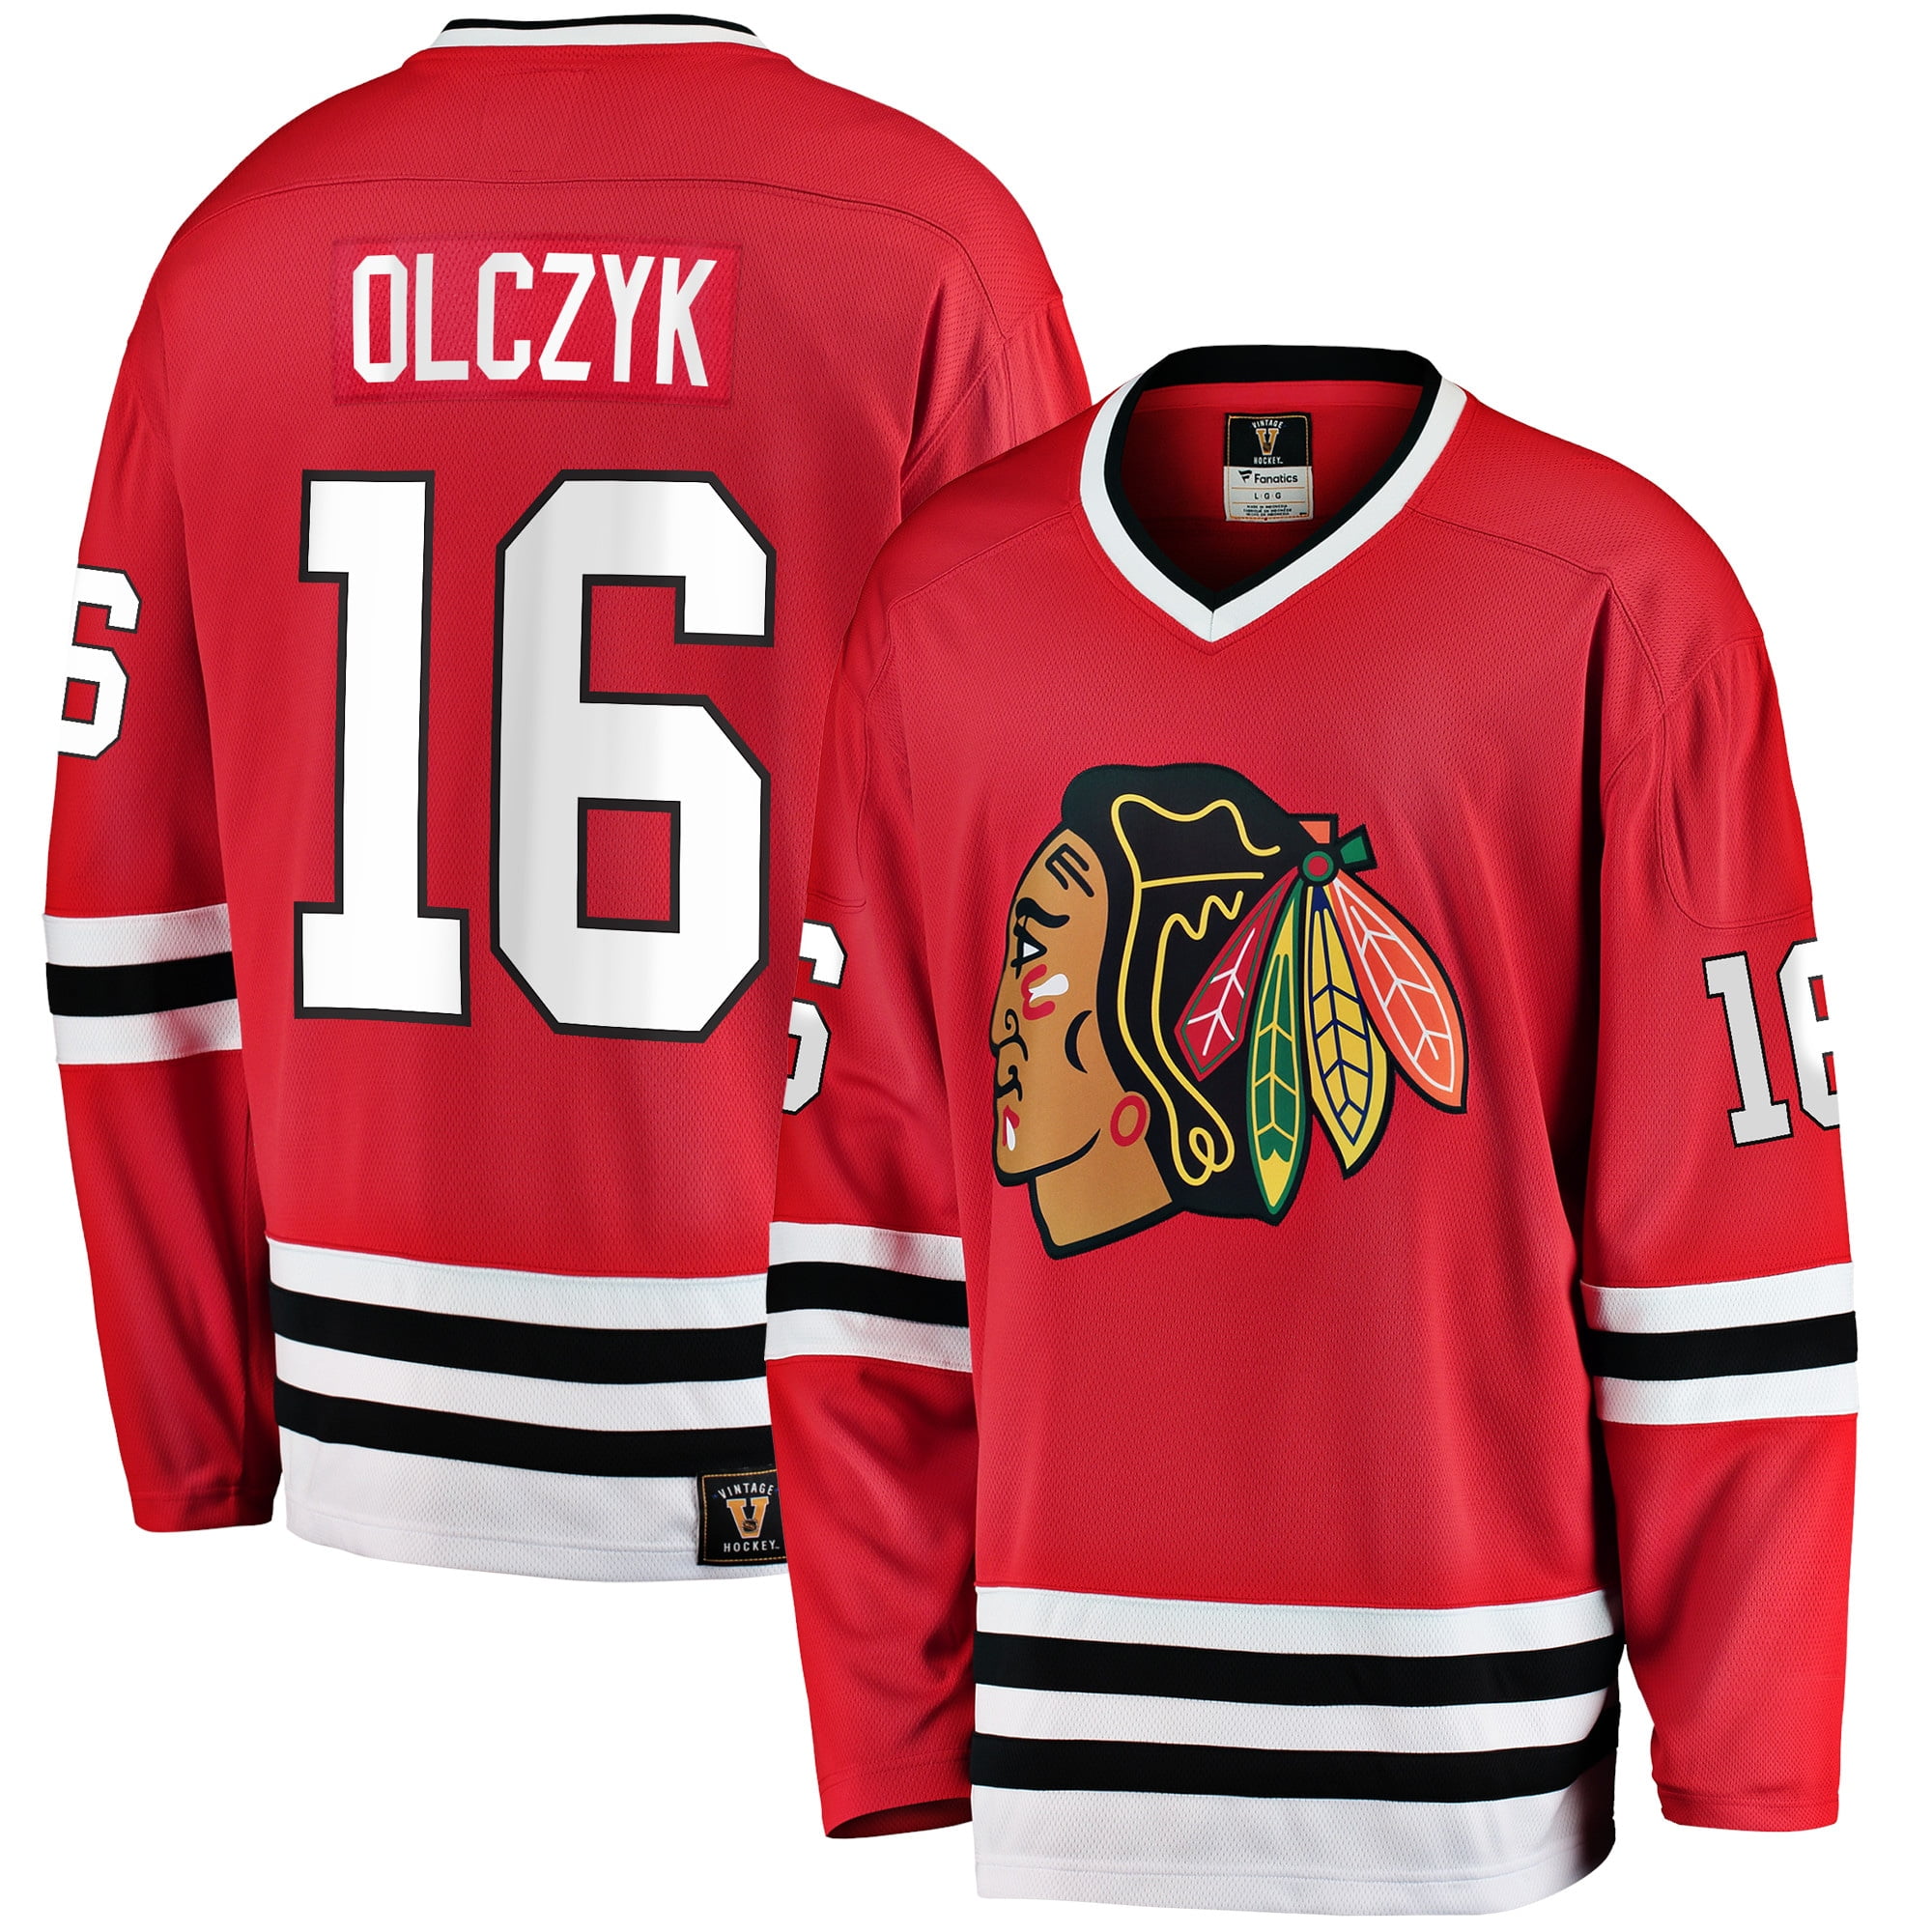 Fanatics Branded NHL Women's Chicago Blackhawks Fashion Red V-Neck T-Shirt, XL